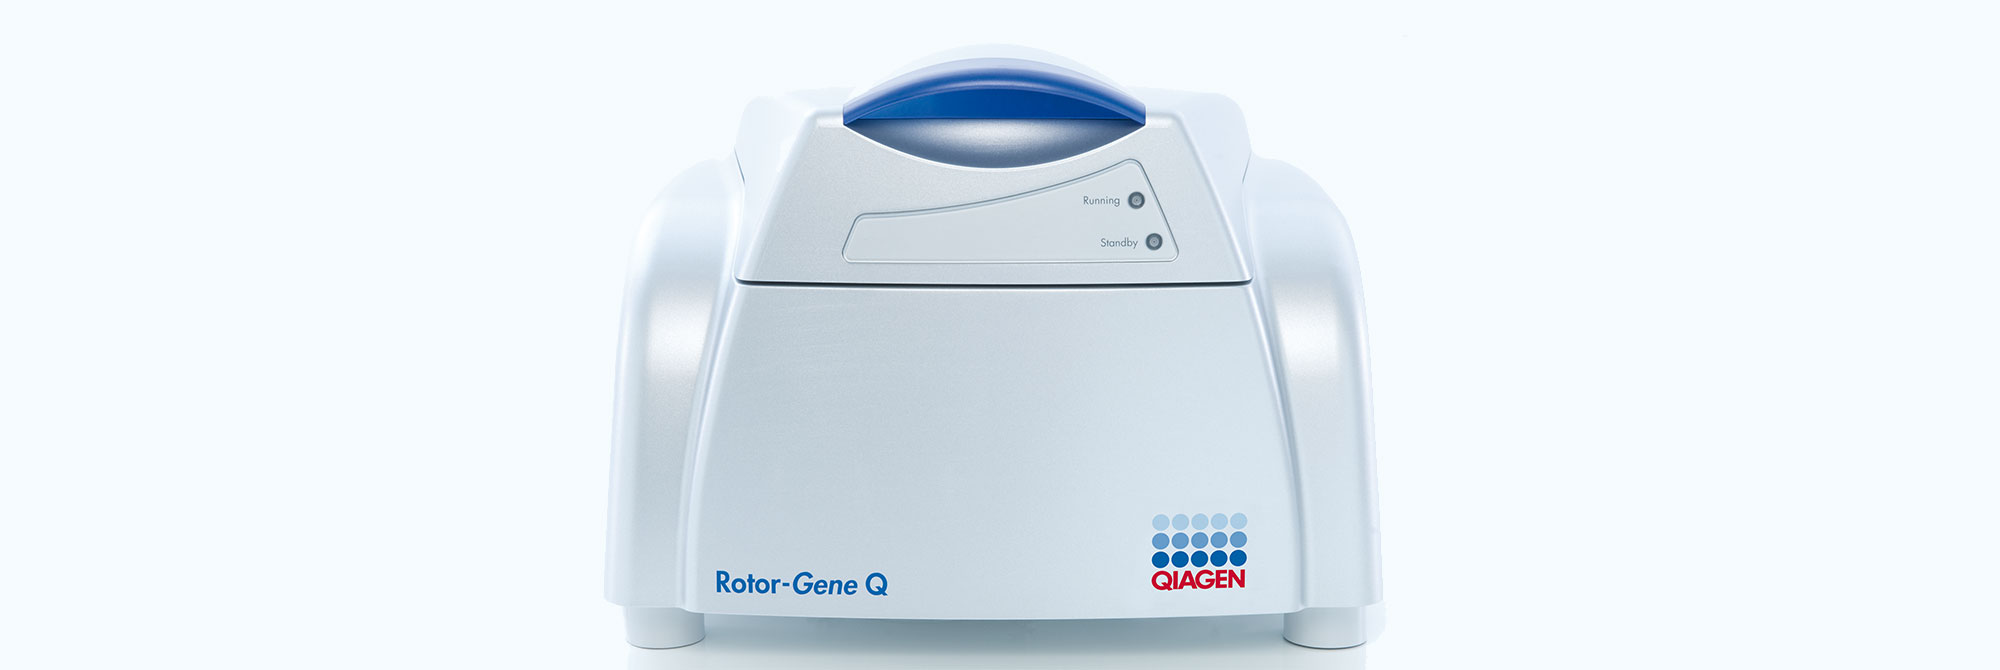 Image of Rotor-Gene Q